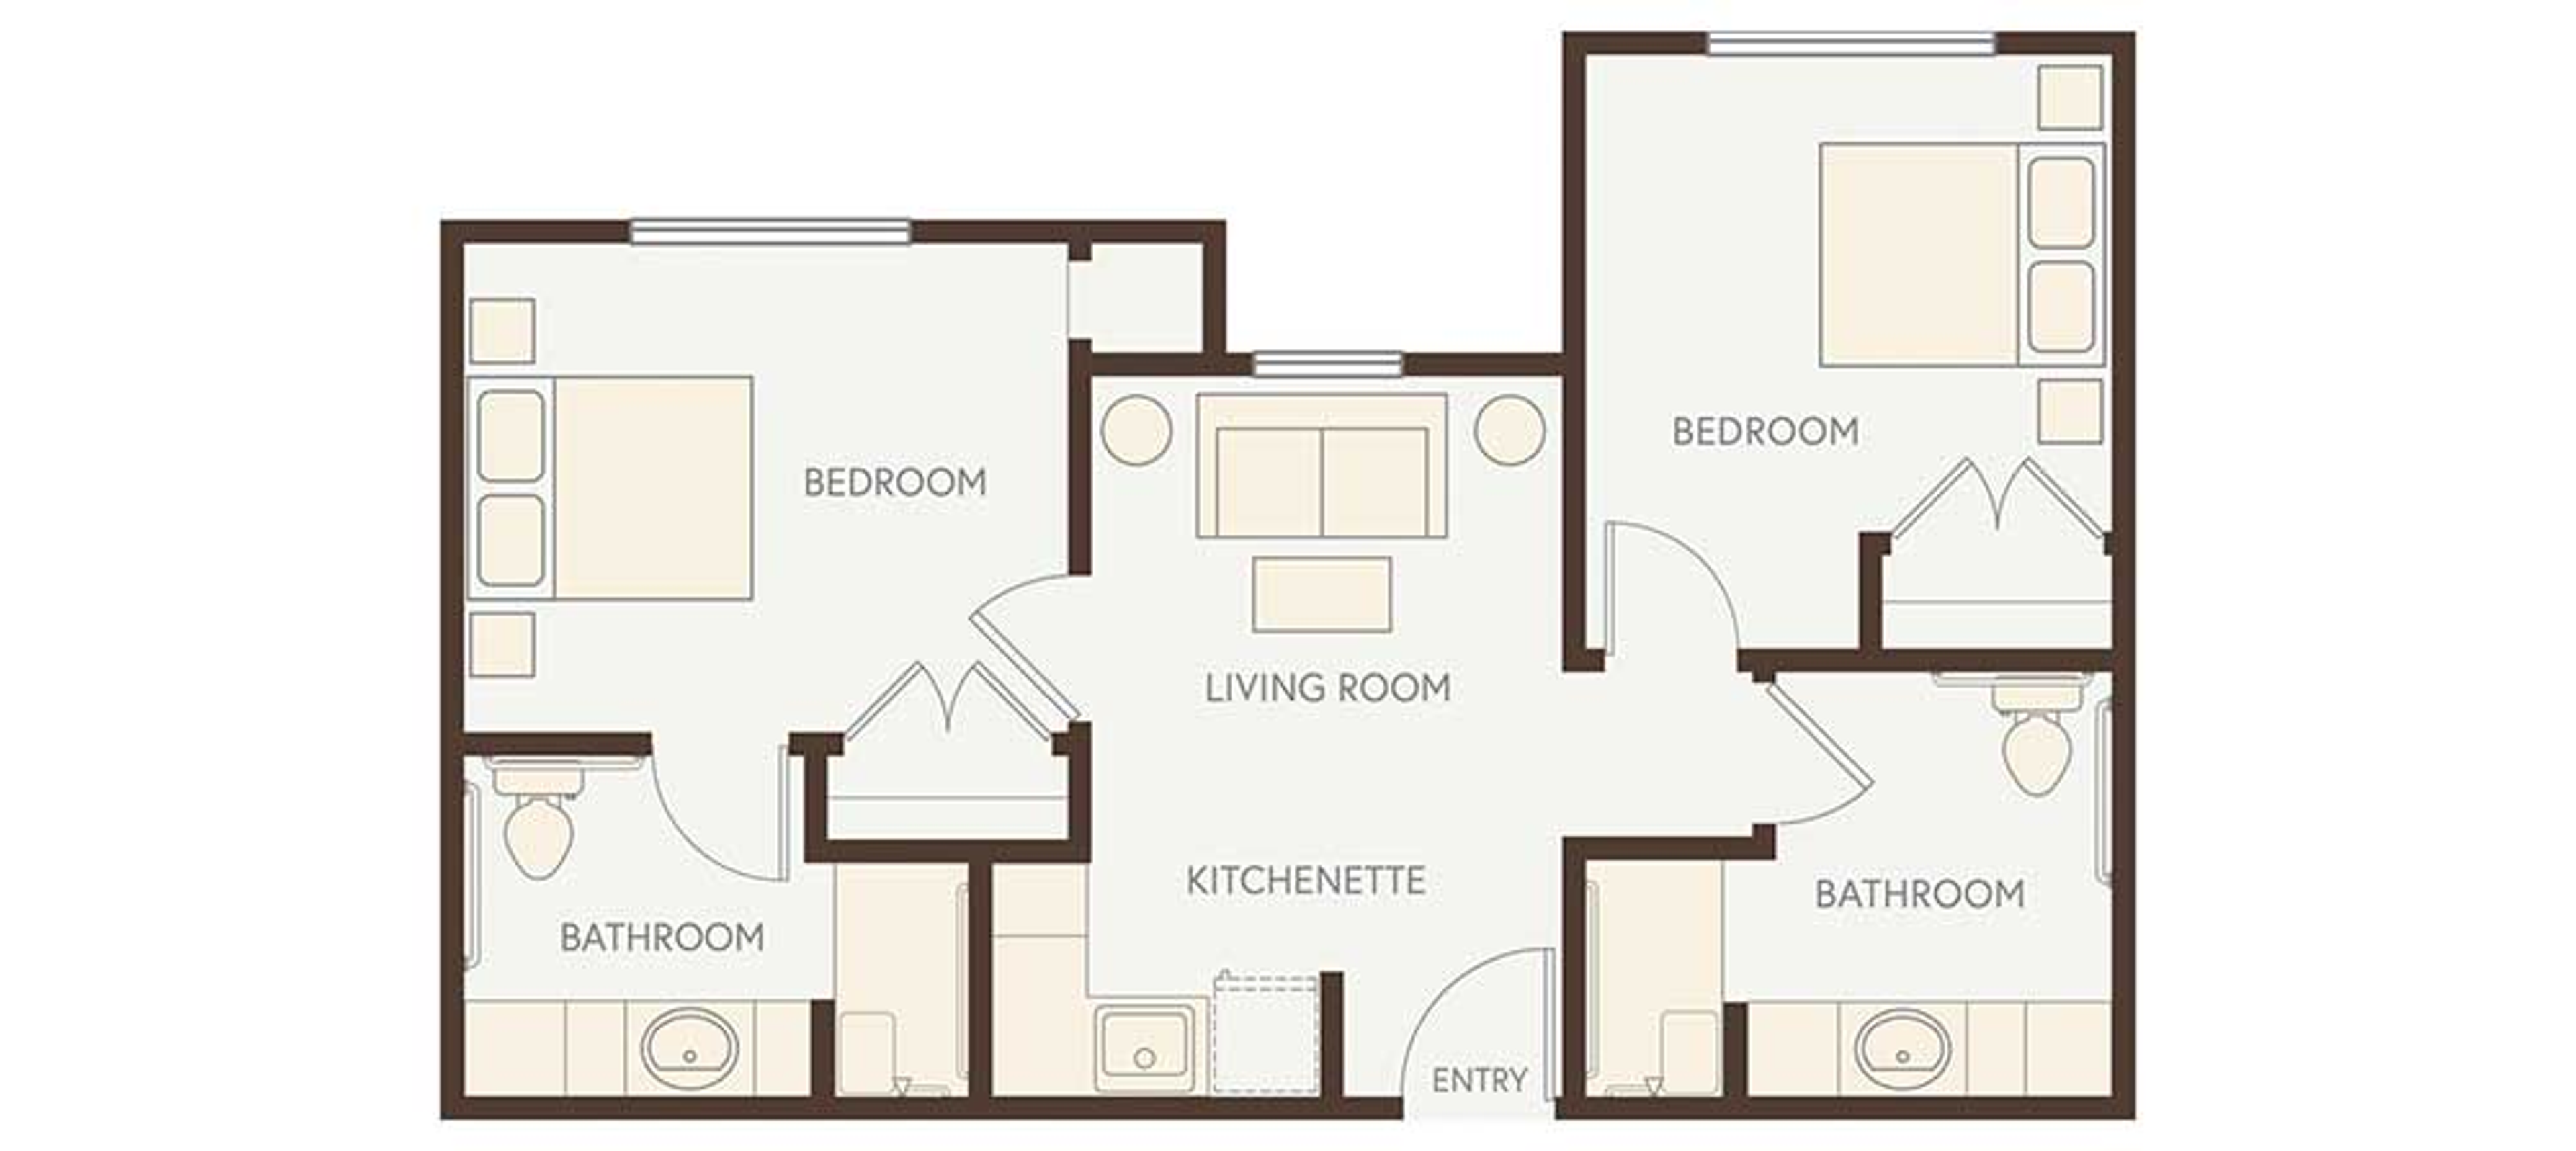 Floorplan - Heartis San Antonio - 2 bed, 2 bath, 685 sq. ft. Assisted Living